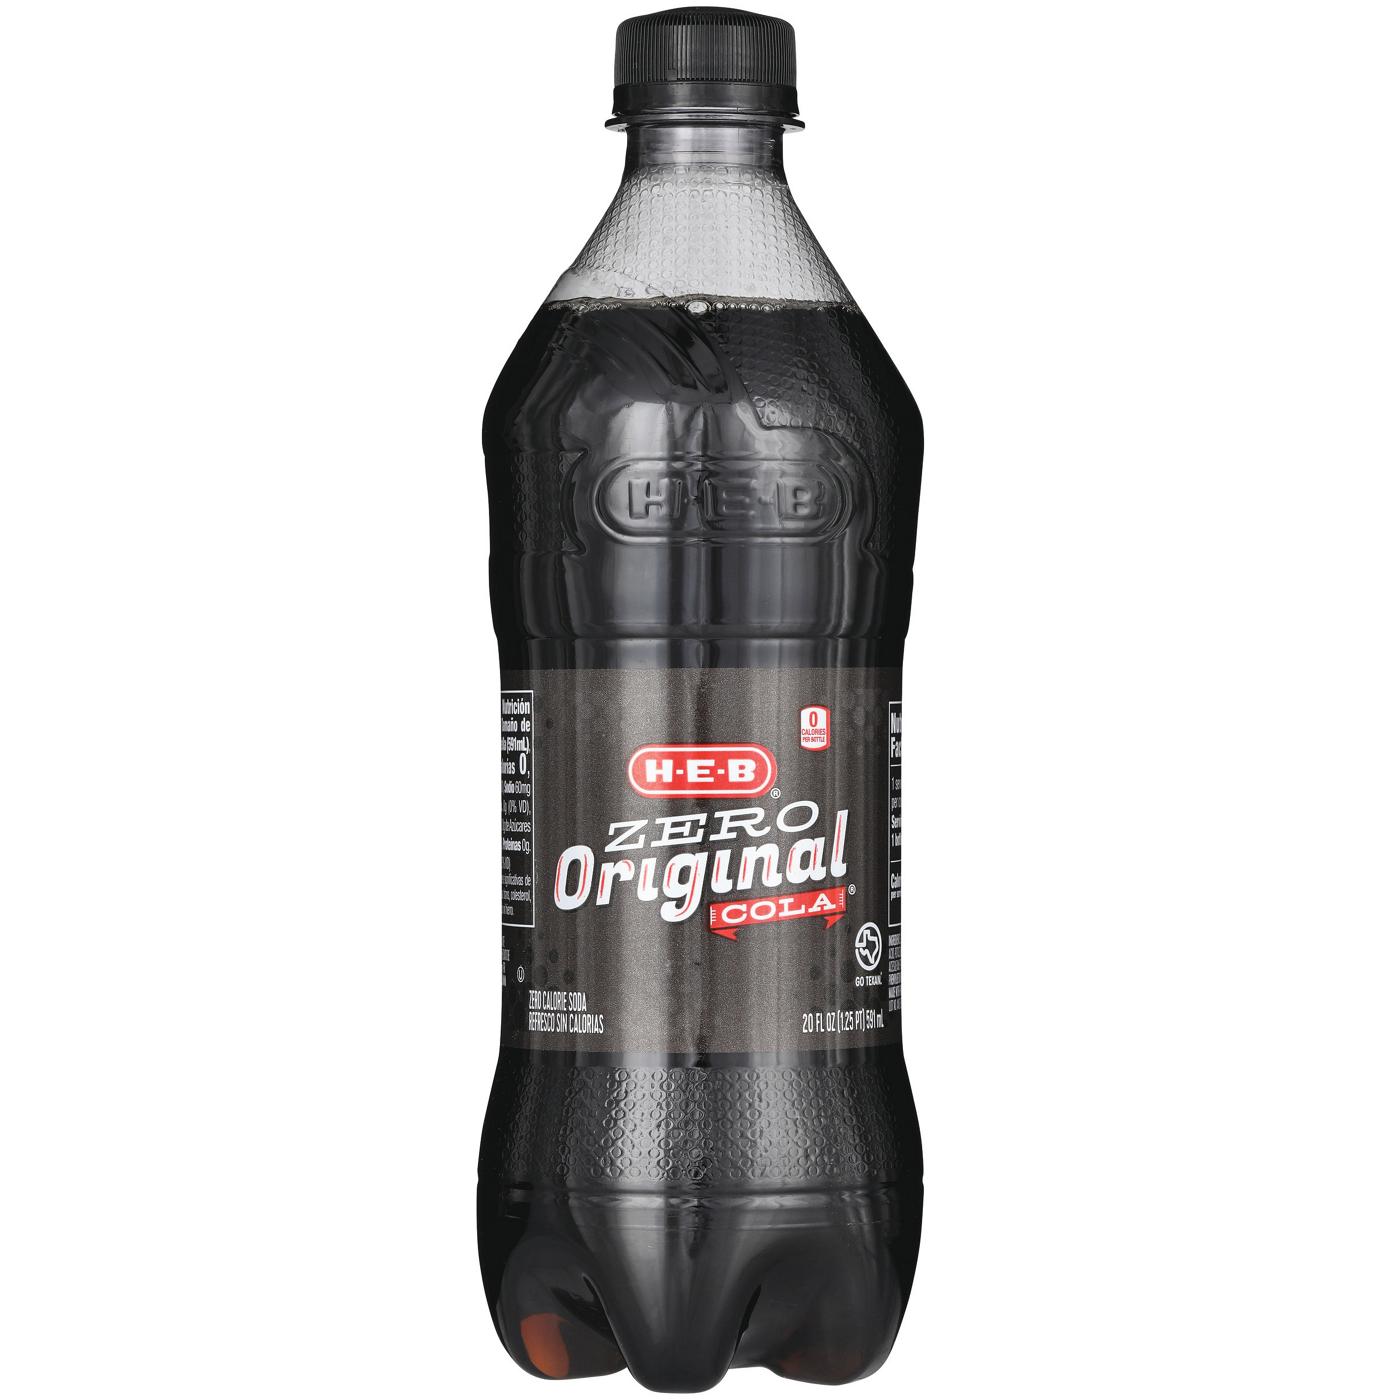 H-E-B Zero Calorie Original Cola; image 1 of 2